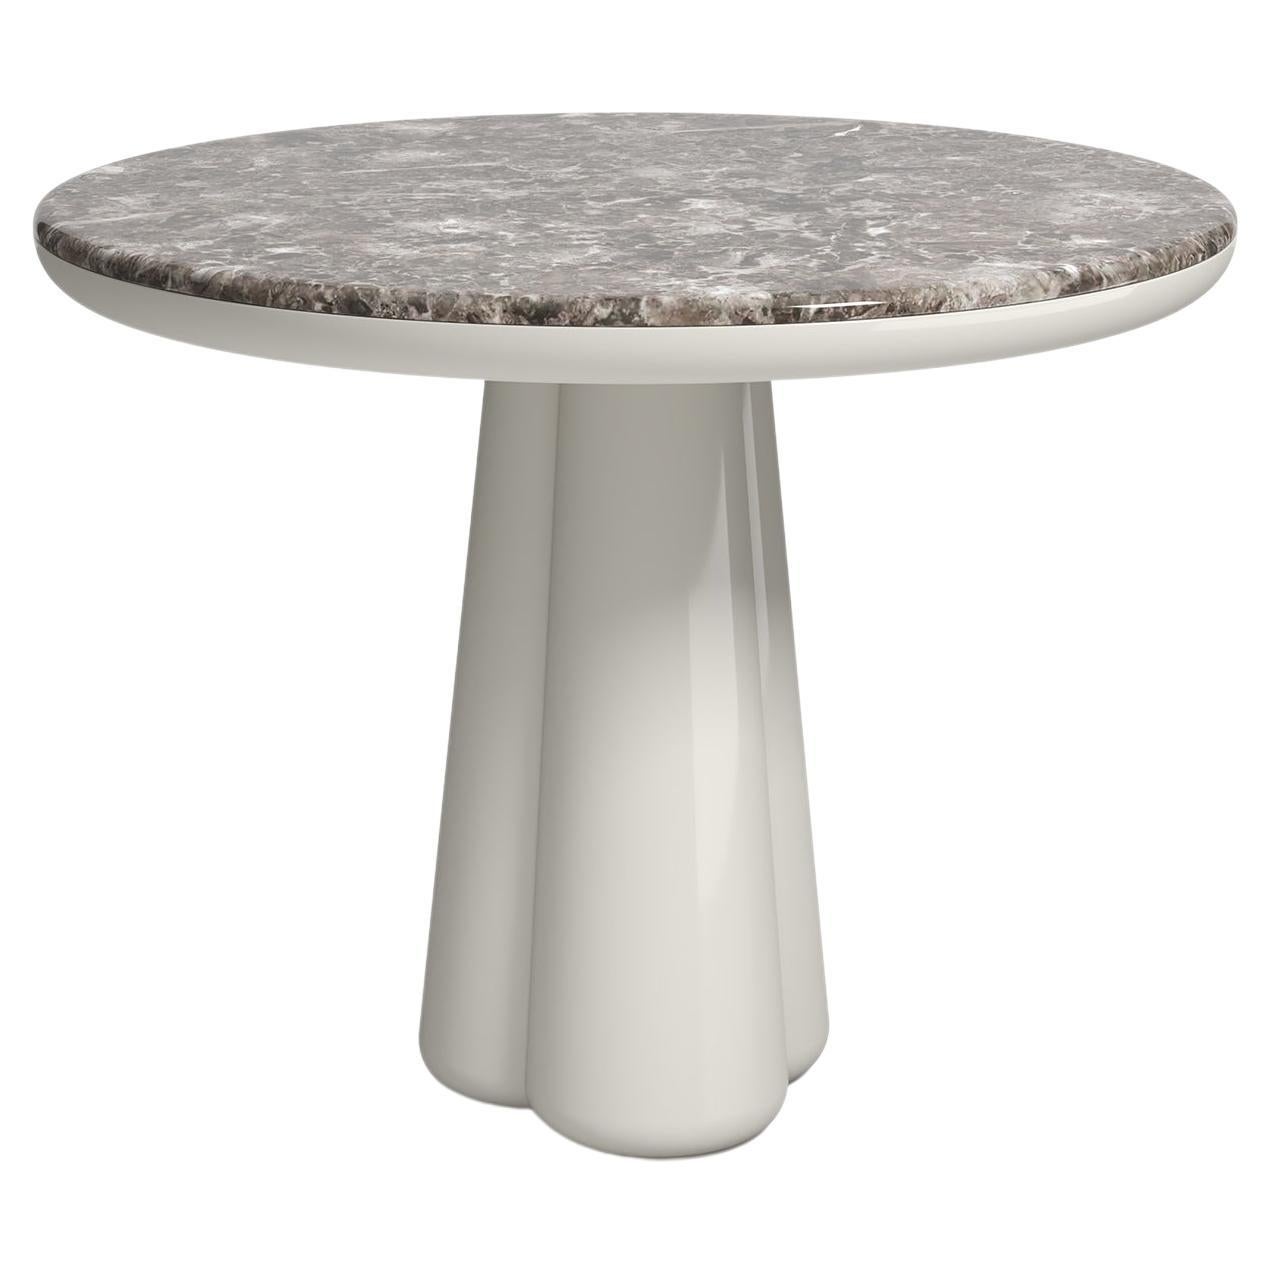 Table Elena Salmistraro du 21e siècle plateau en marbre polyuréthane Grigio Billiemi